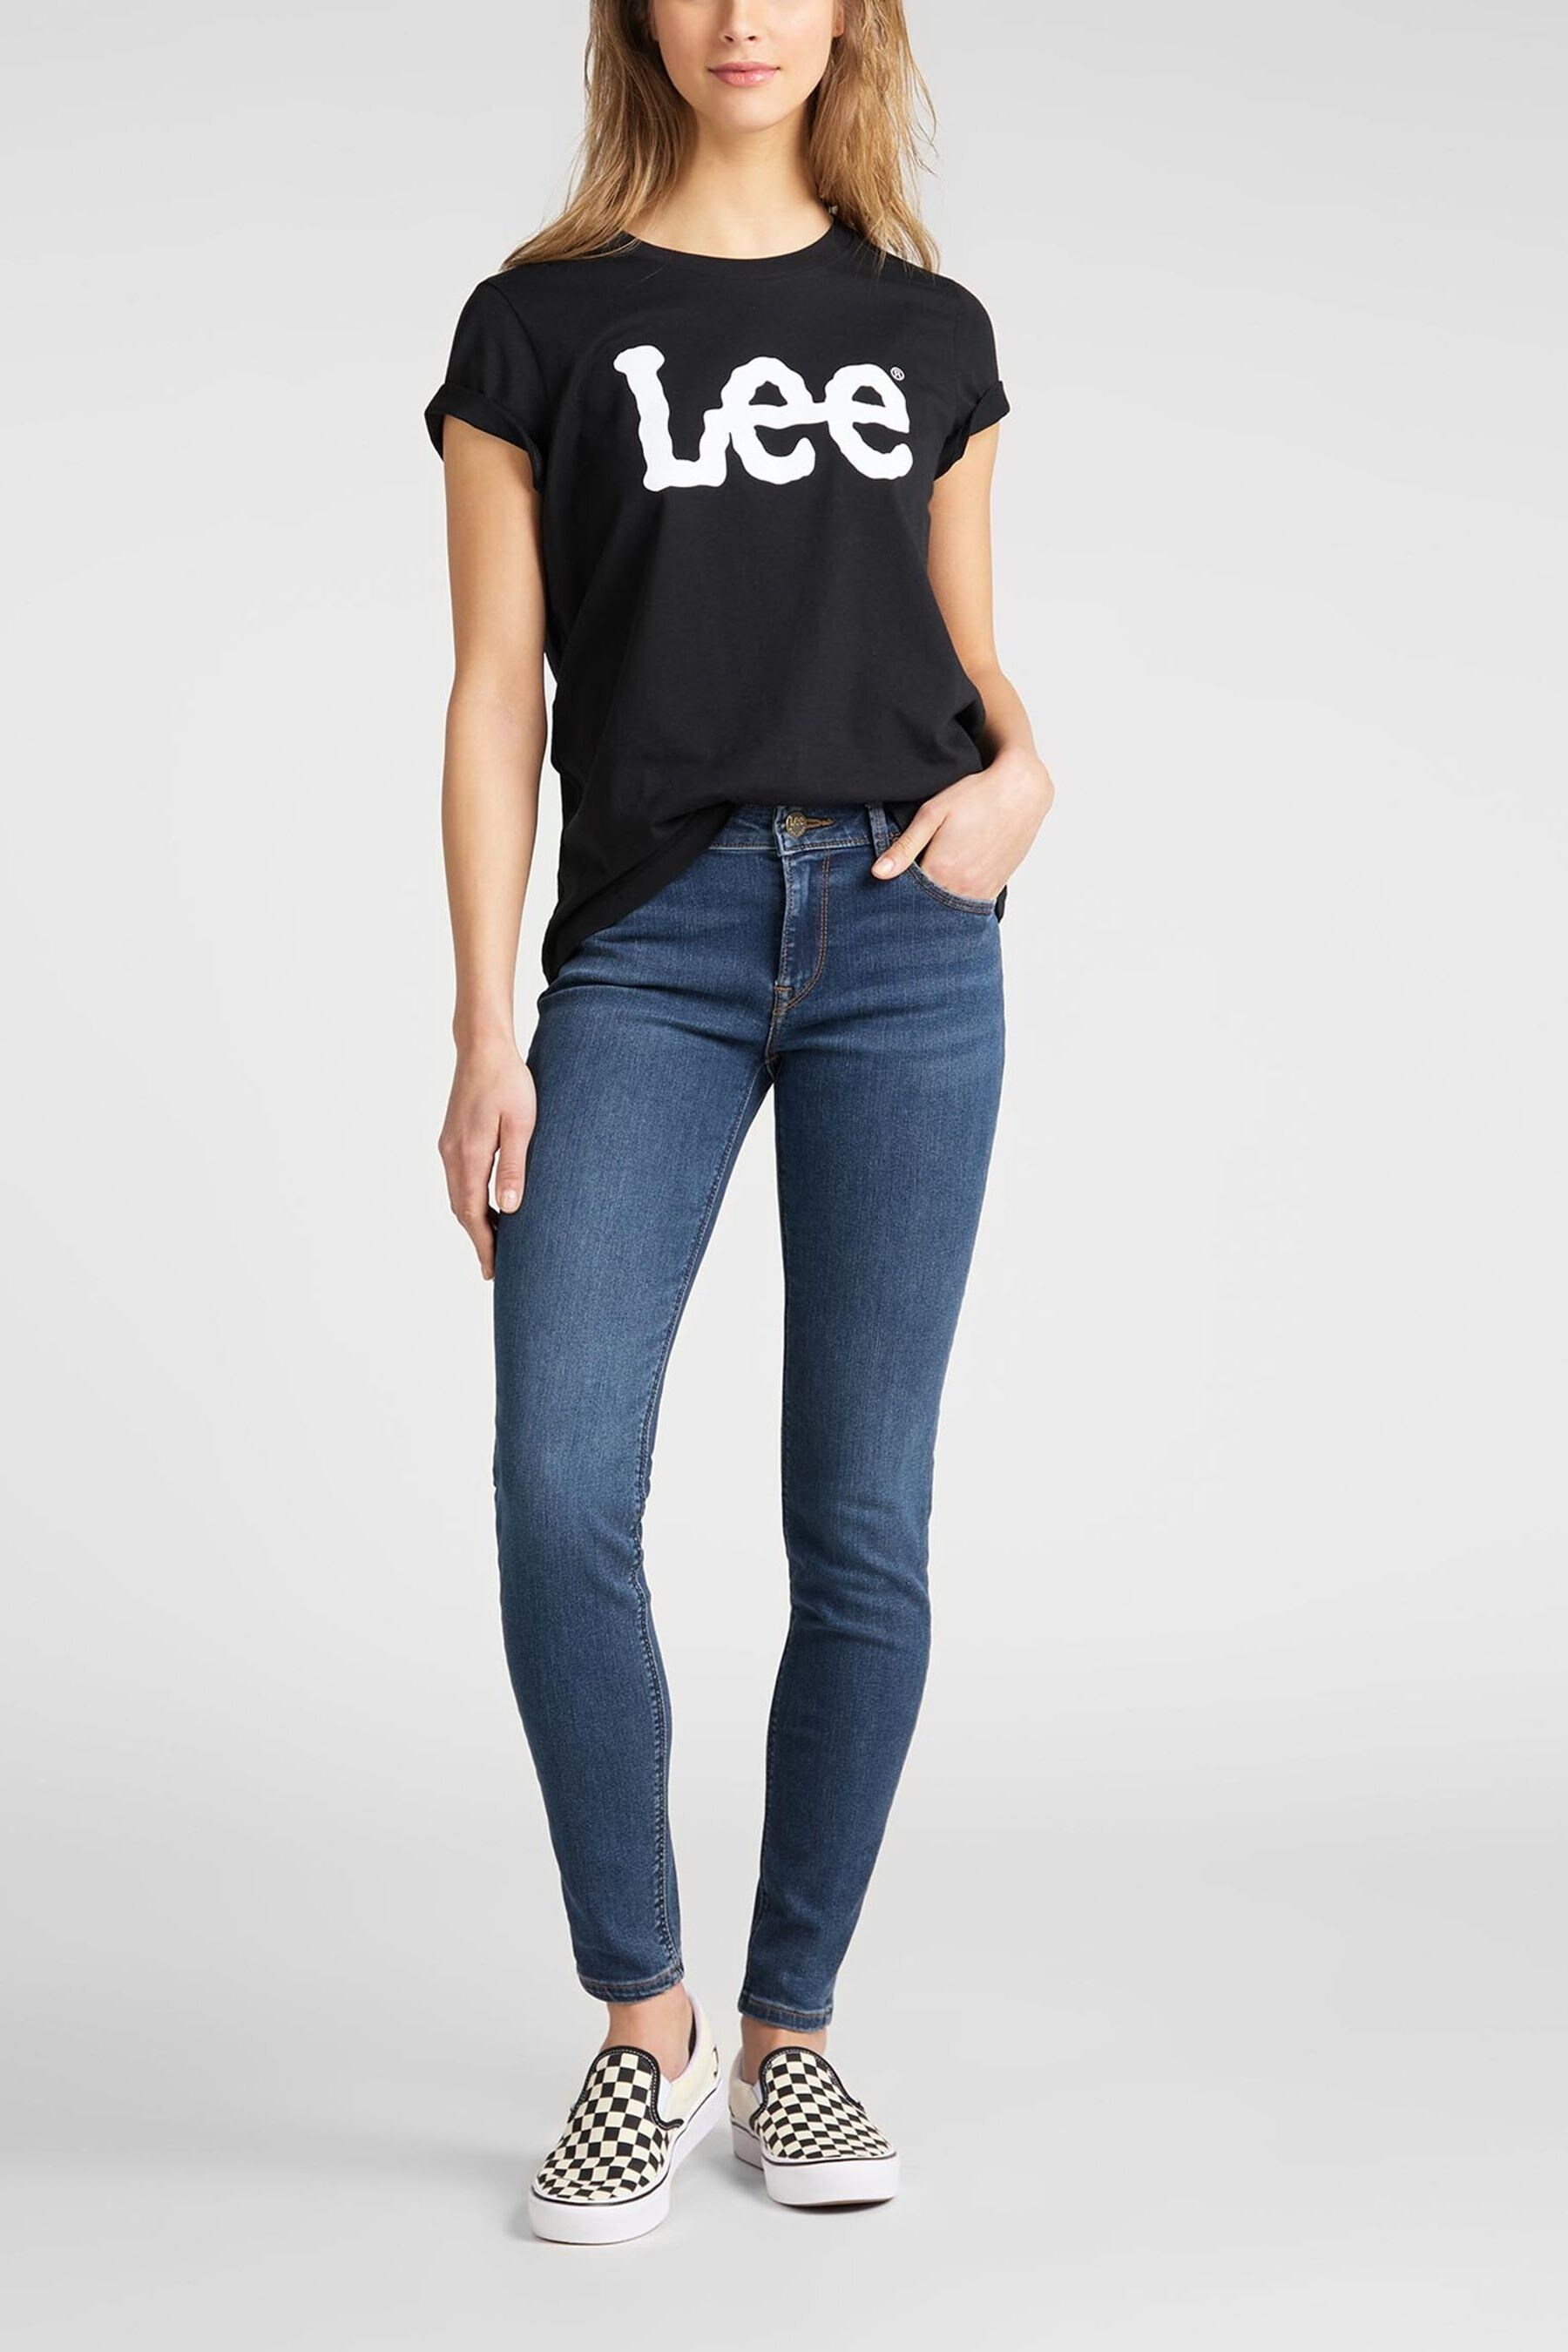 Buy Lee® Scarlett Skinny Ankle Length Jeans from Next Ireland